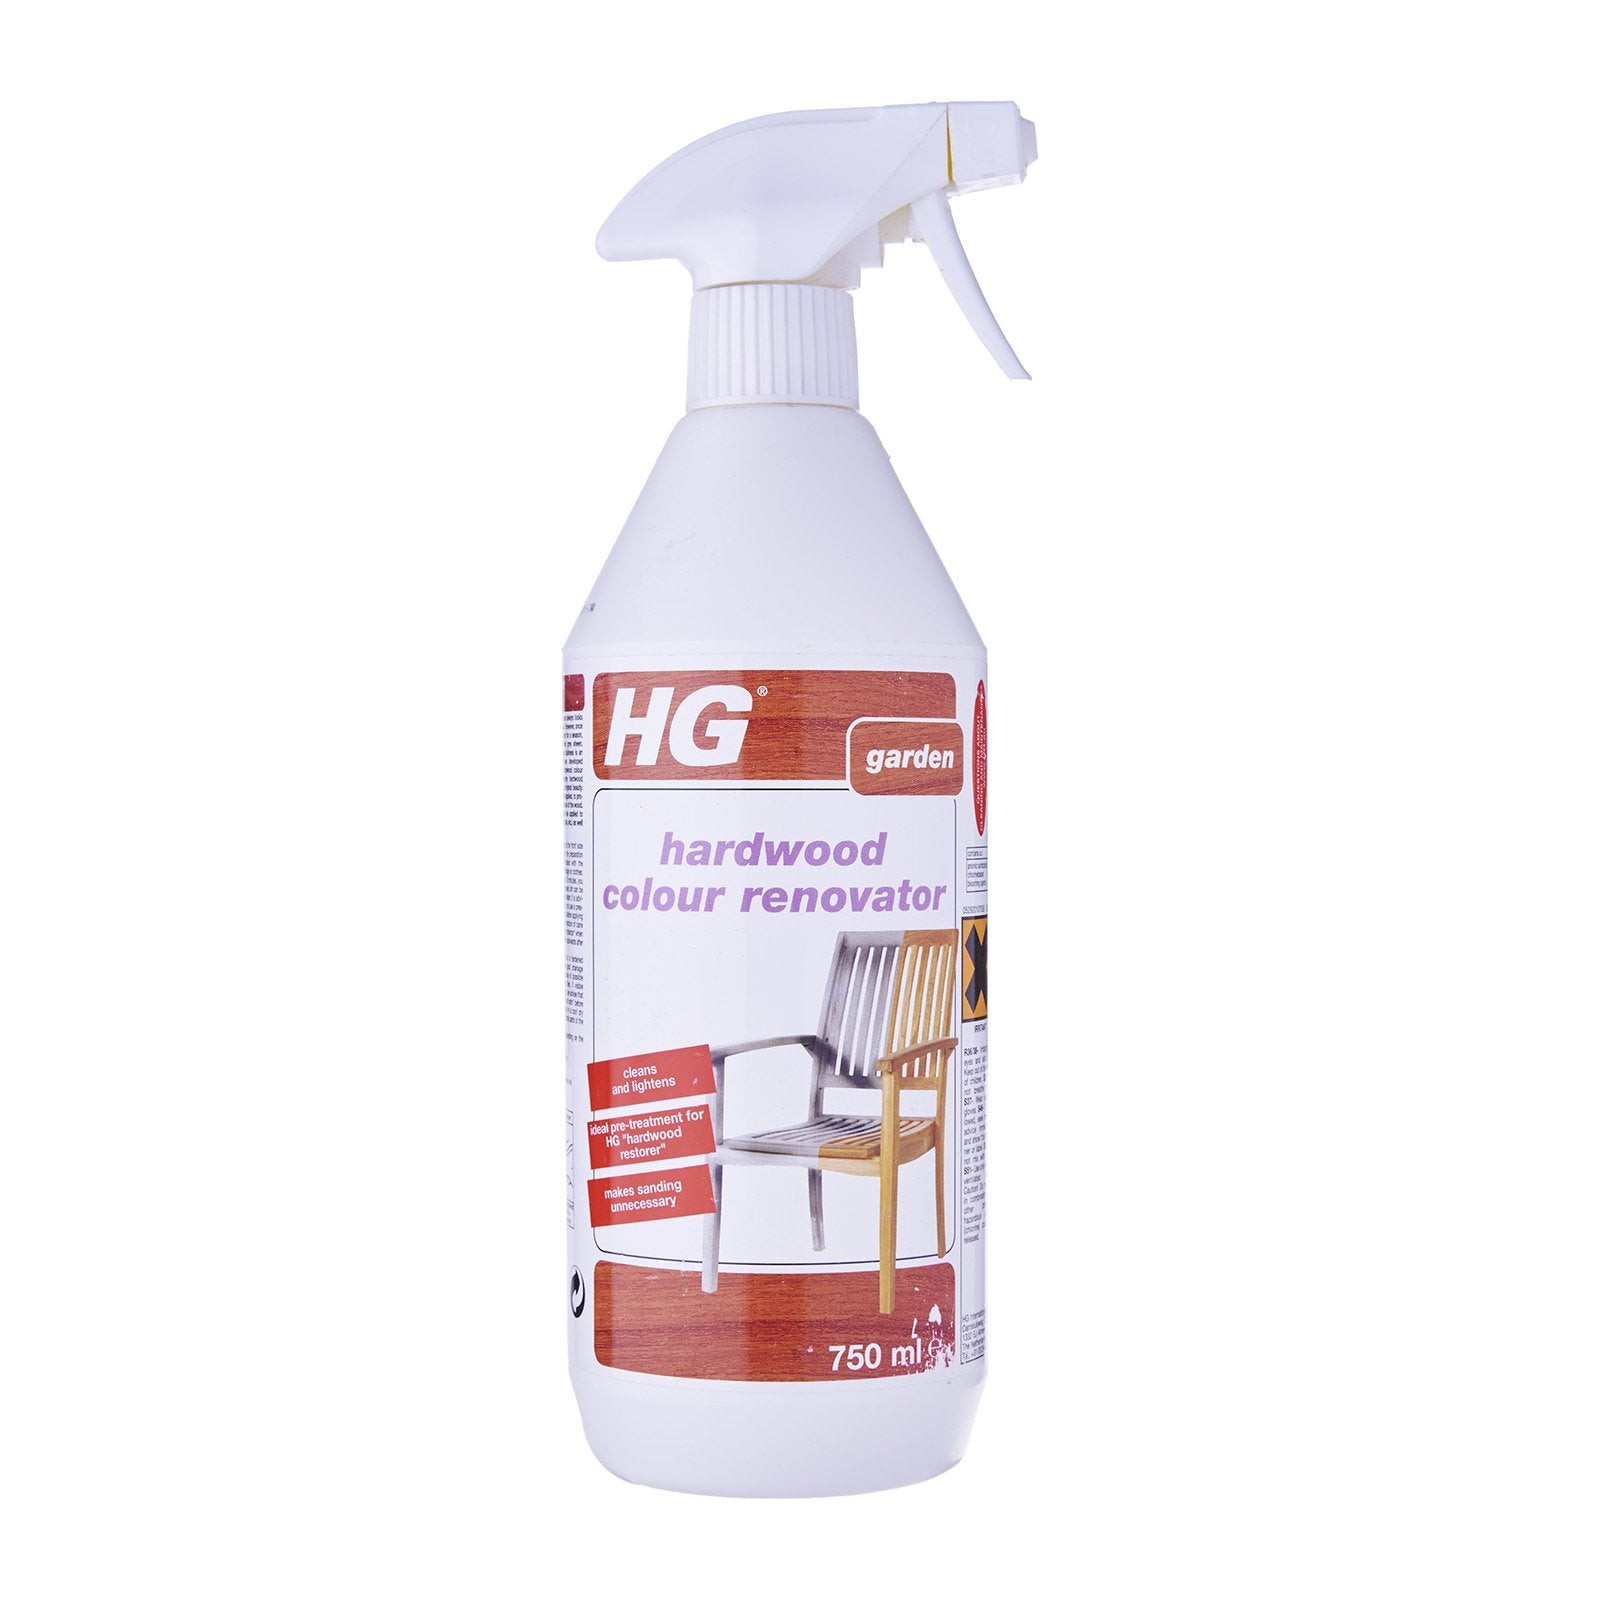 HG 292075106 Hardwood Colour Renovator 750ml